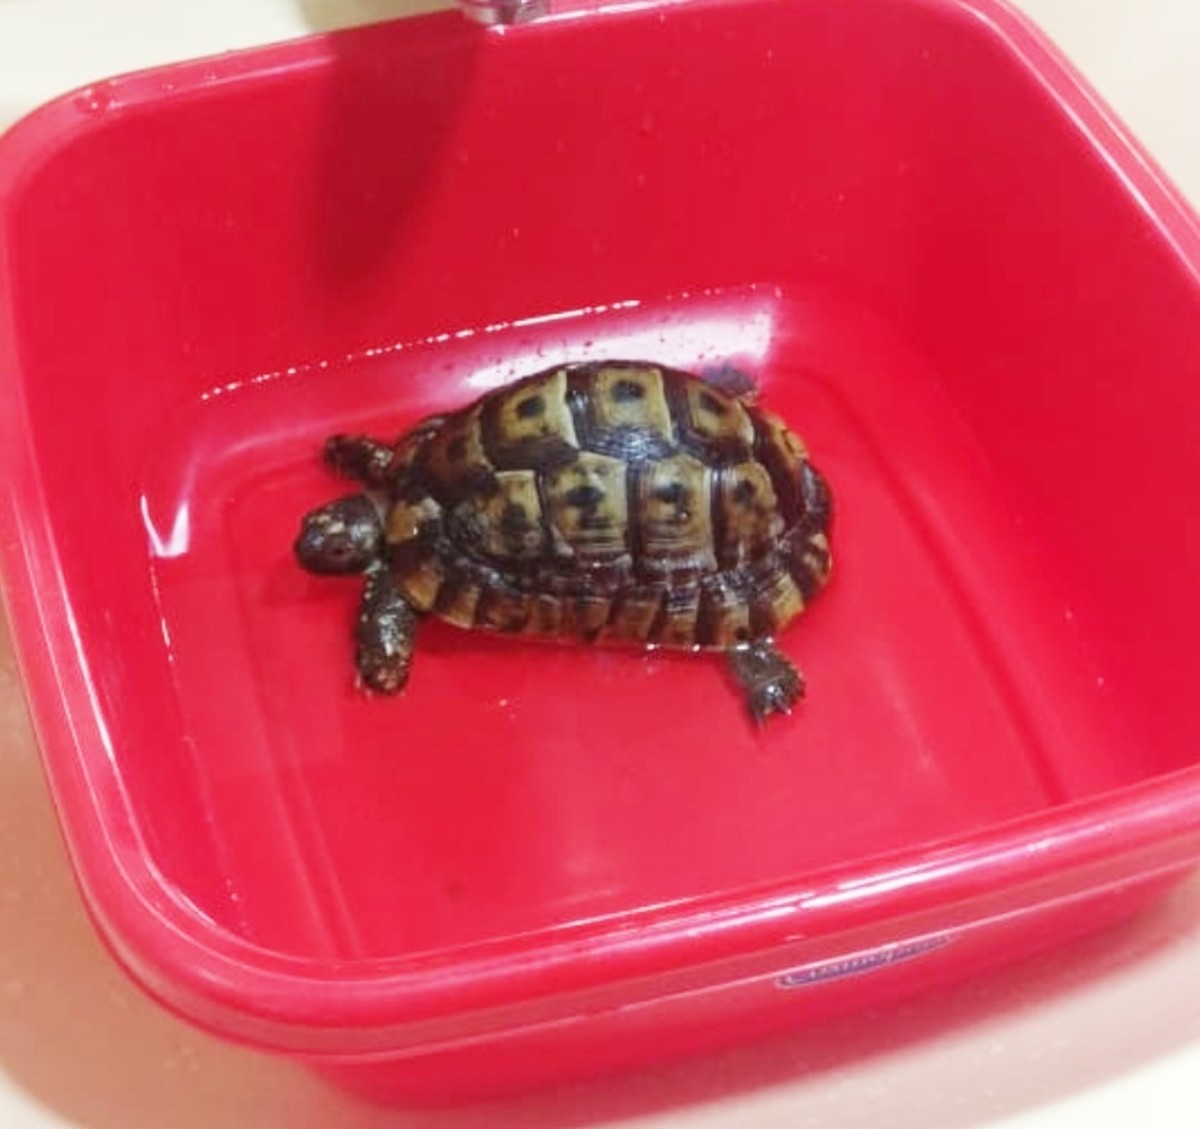 tortoise-health-problems